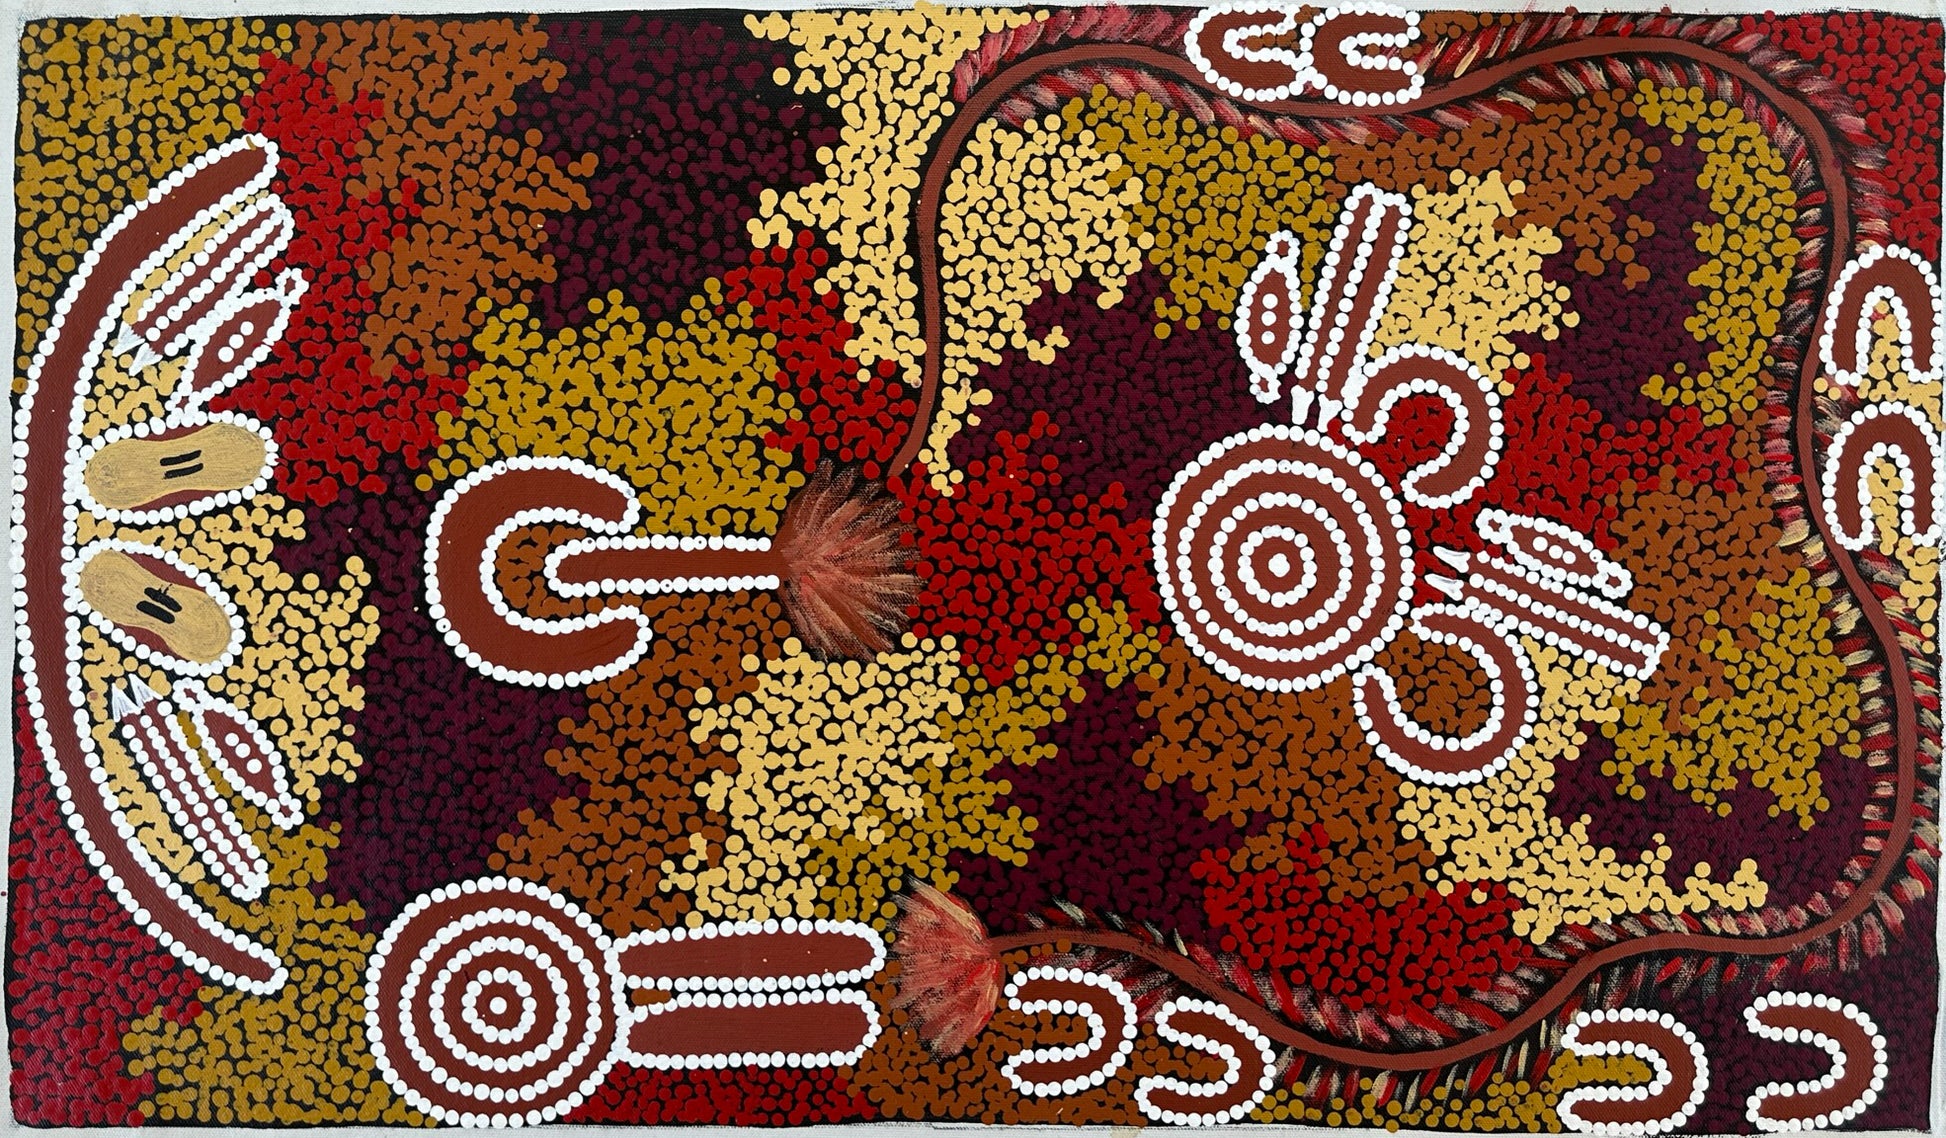 Lynette Granites Nampijinpa Warlpiri Yuendumu Indigenous Art Aboriginal Art Australian Art Bush Fire Dreaming Two Men West of Yuendumu Dot Art Iconography Symbolism Traditional Art Painting 